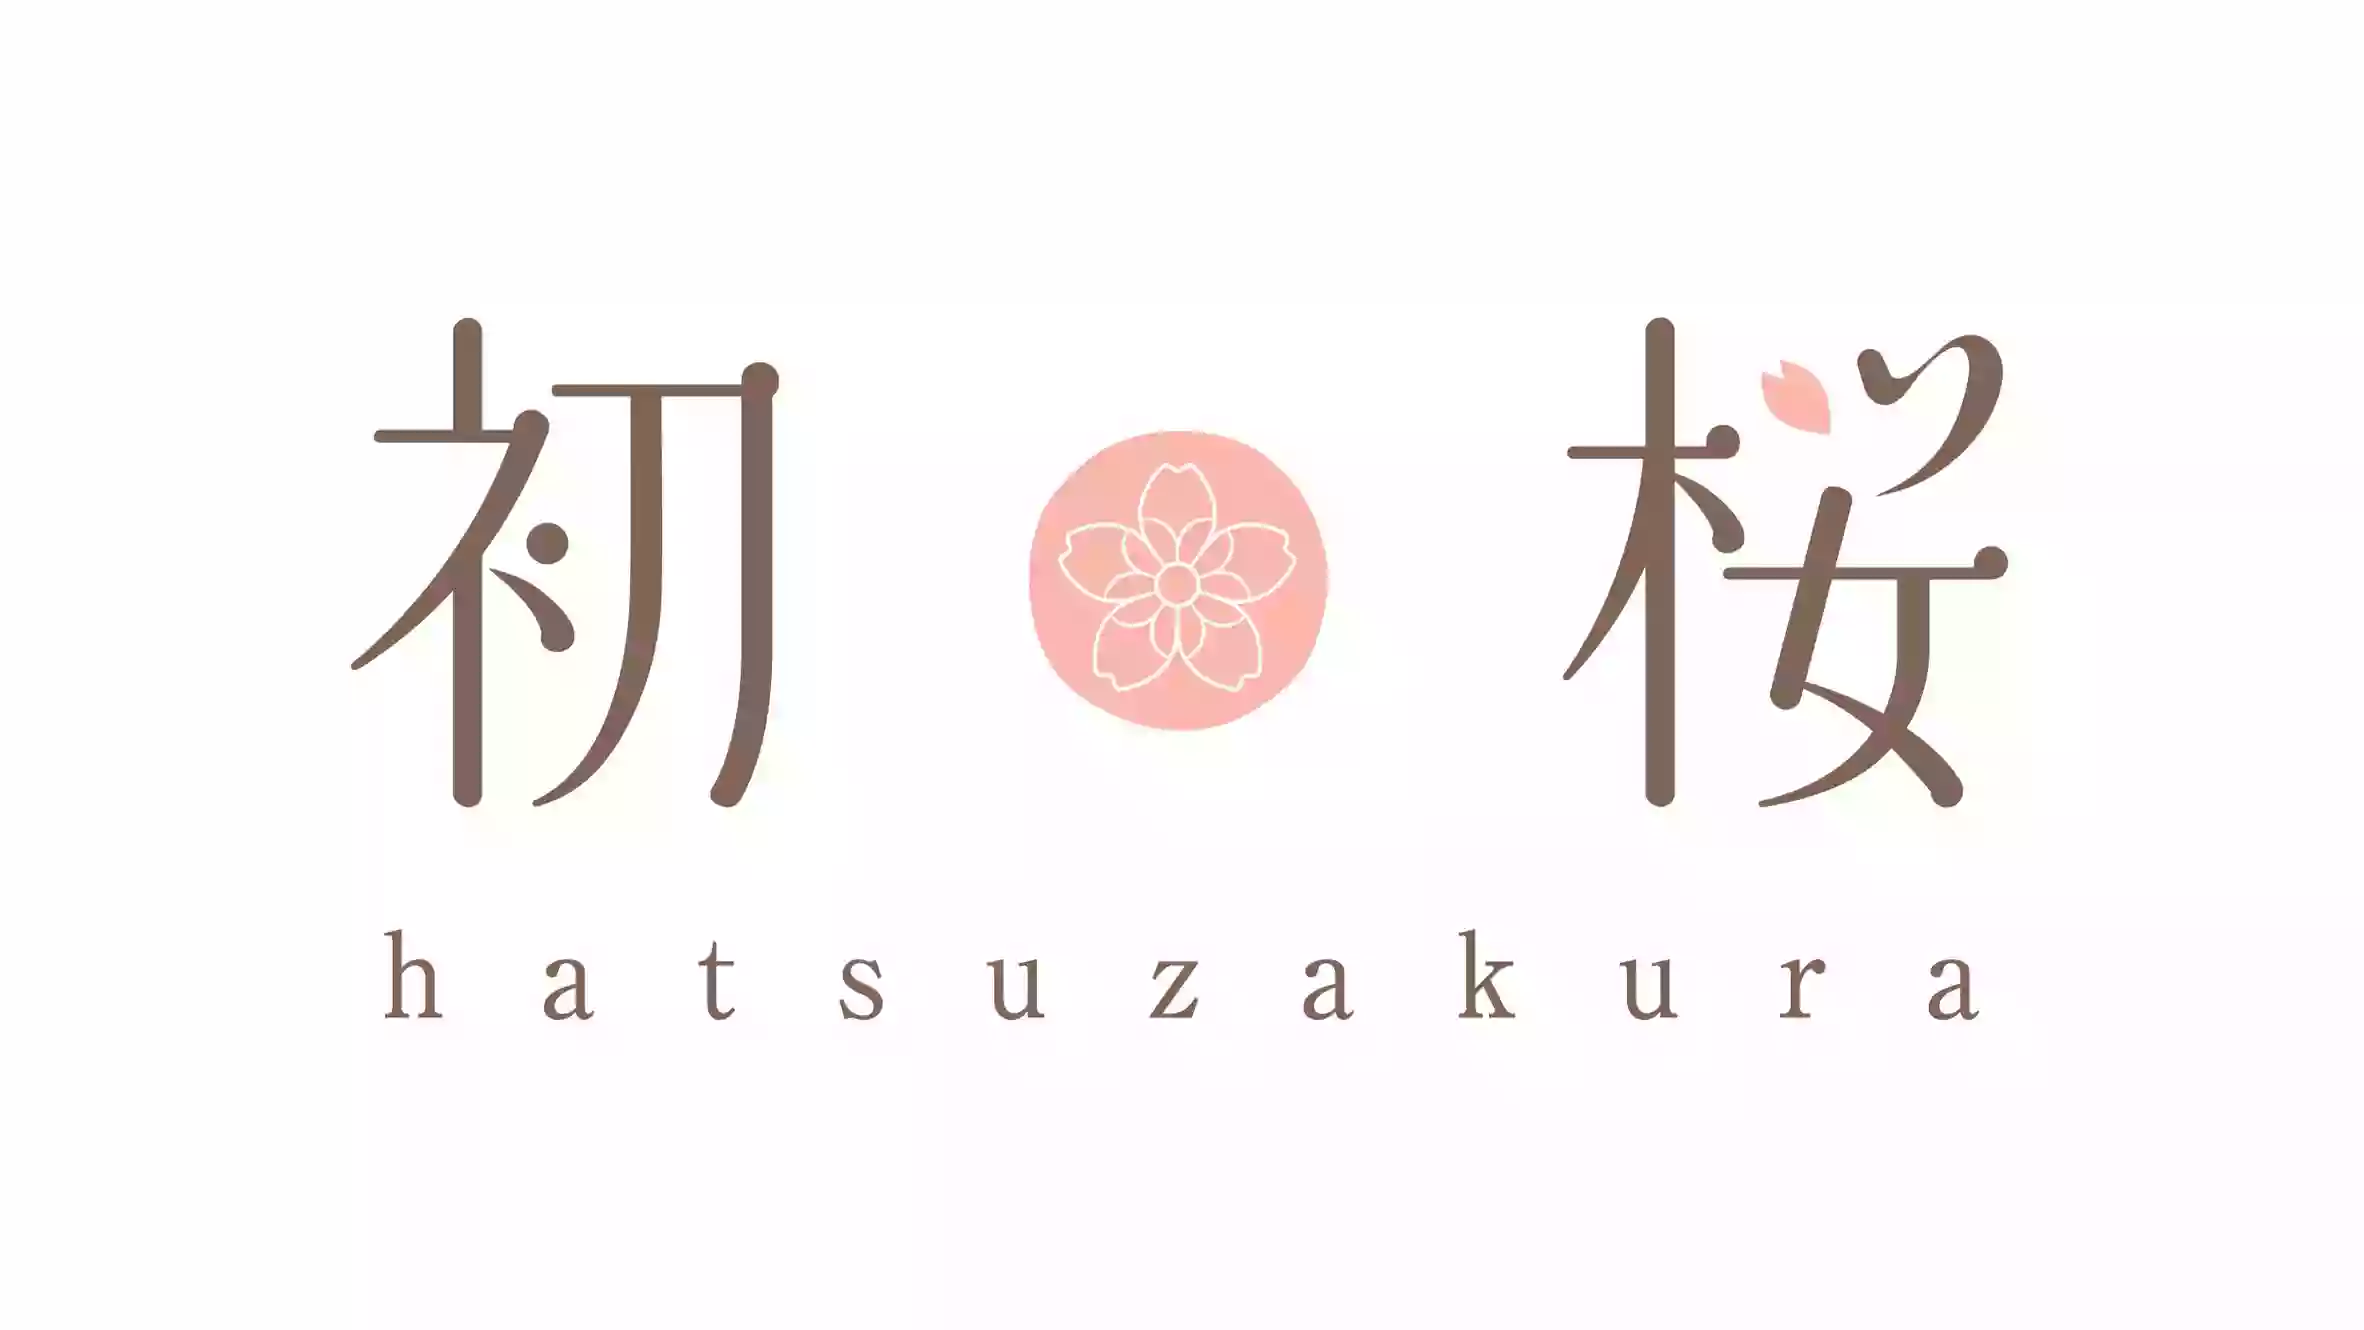 Hatsuzakura